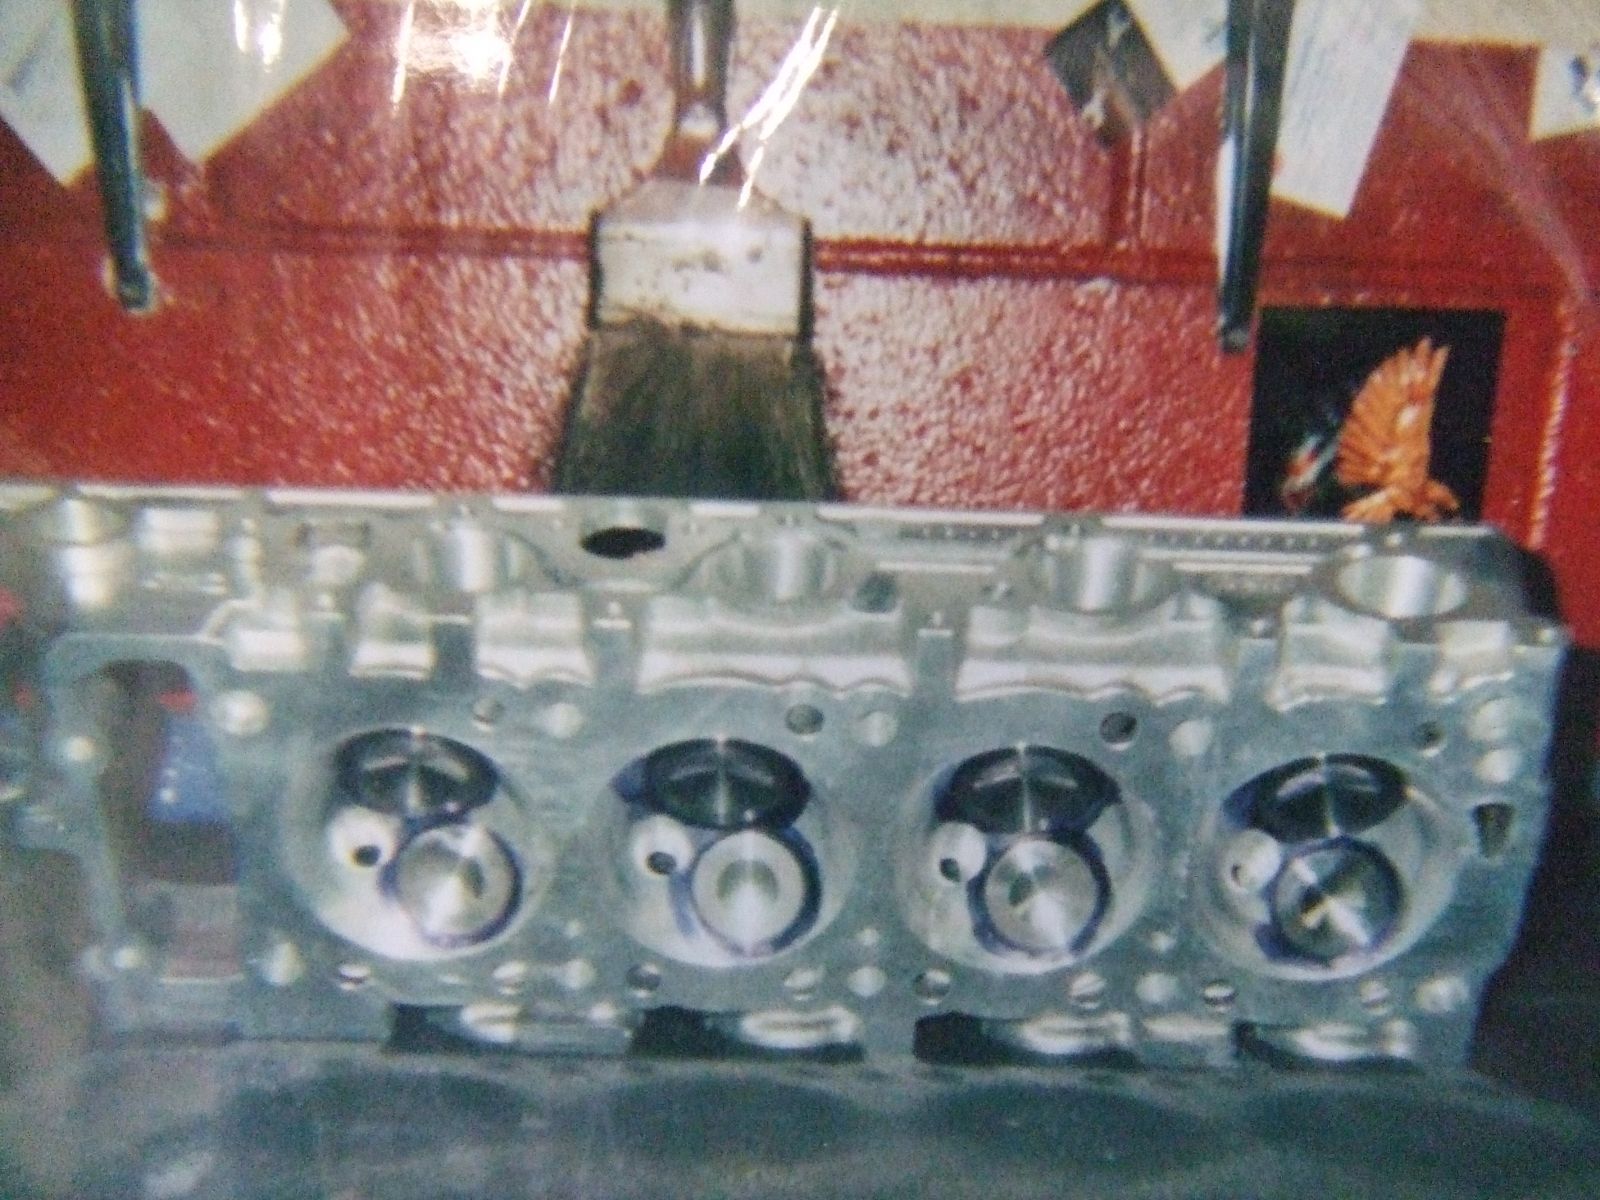 stainless steel valves